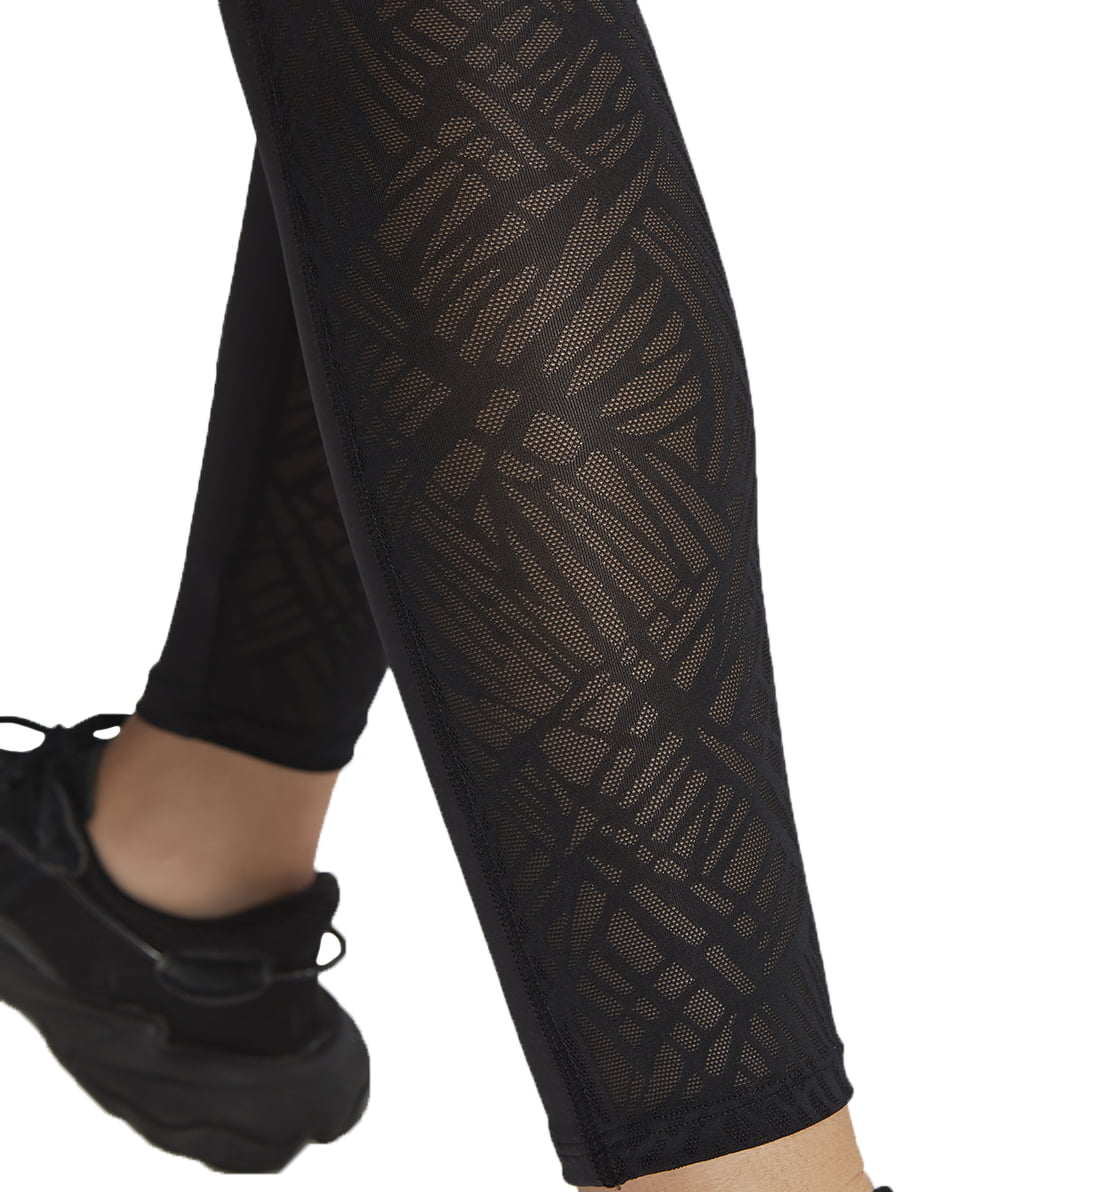 Panache Ultra Adapt High Waist Sports Leggings (5023),Medium,Black